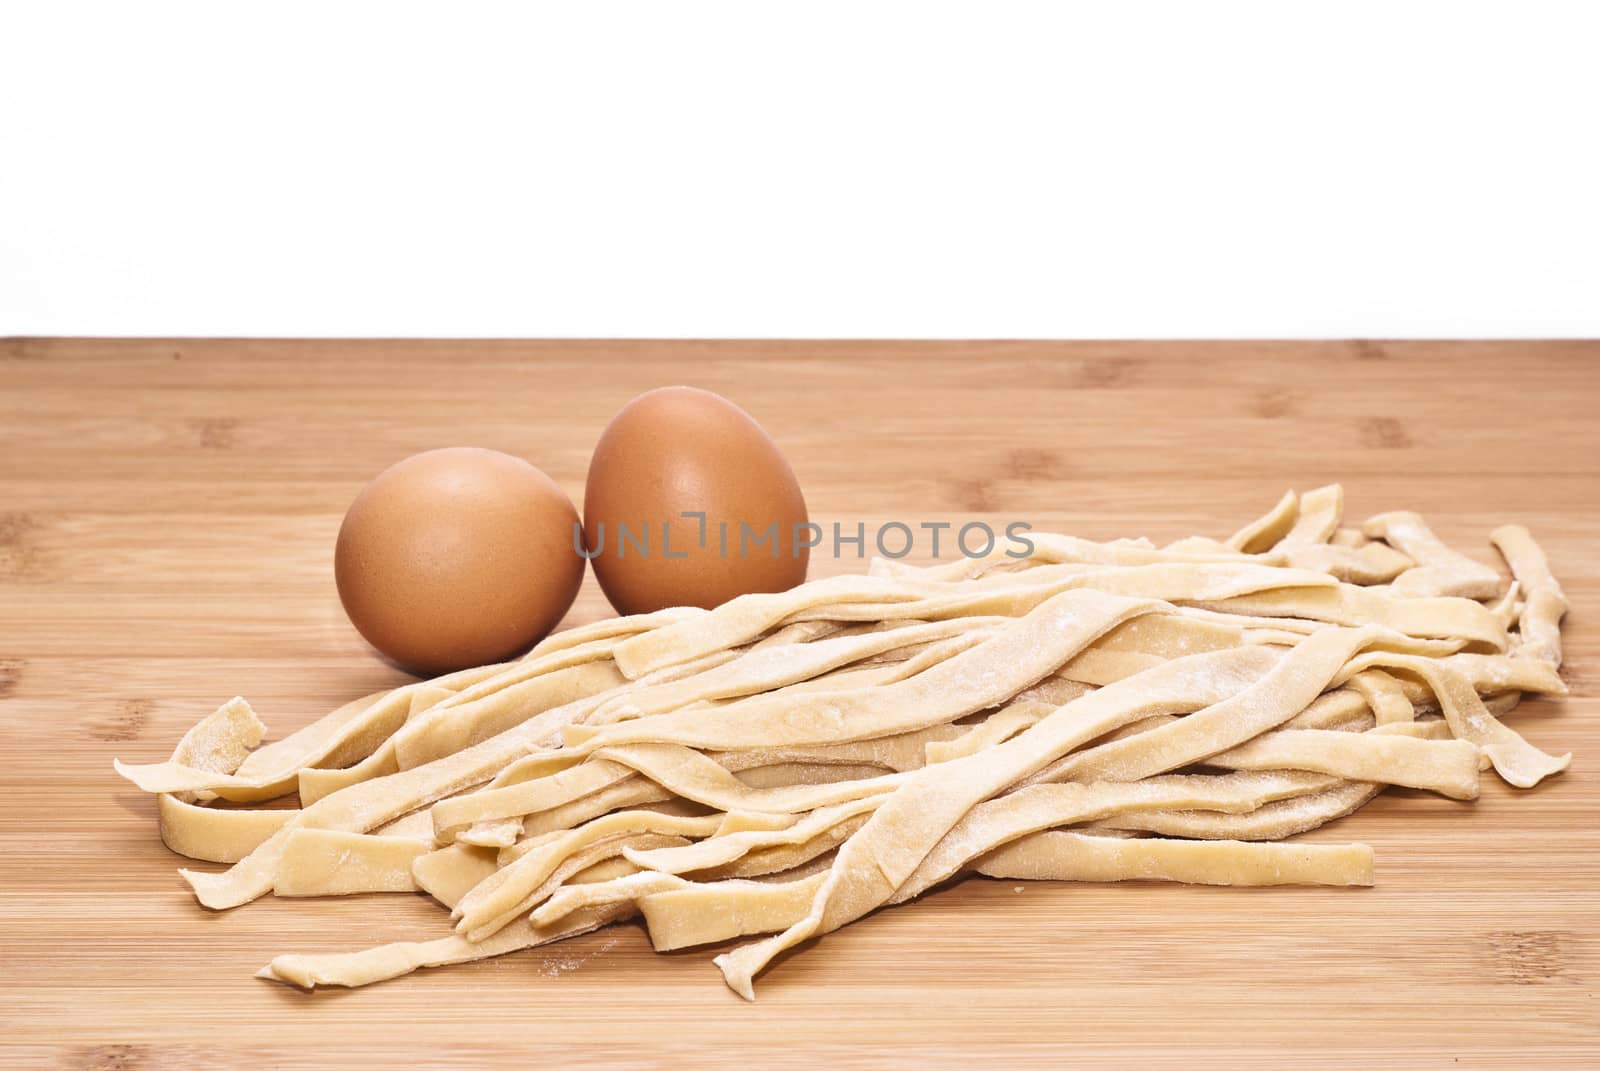 fresh egg noodles homemade by gandolfocannatella